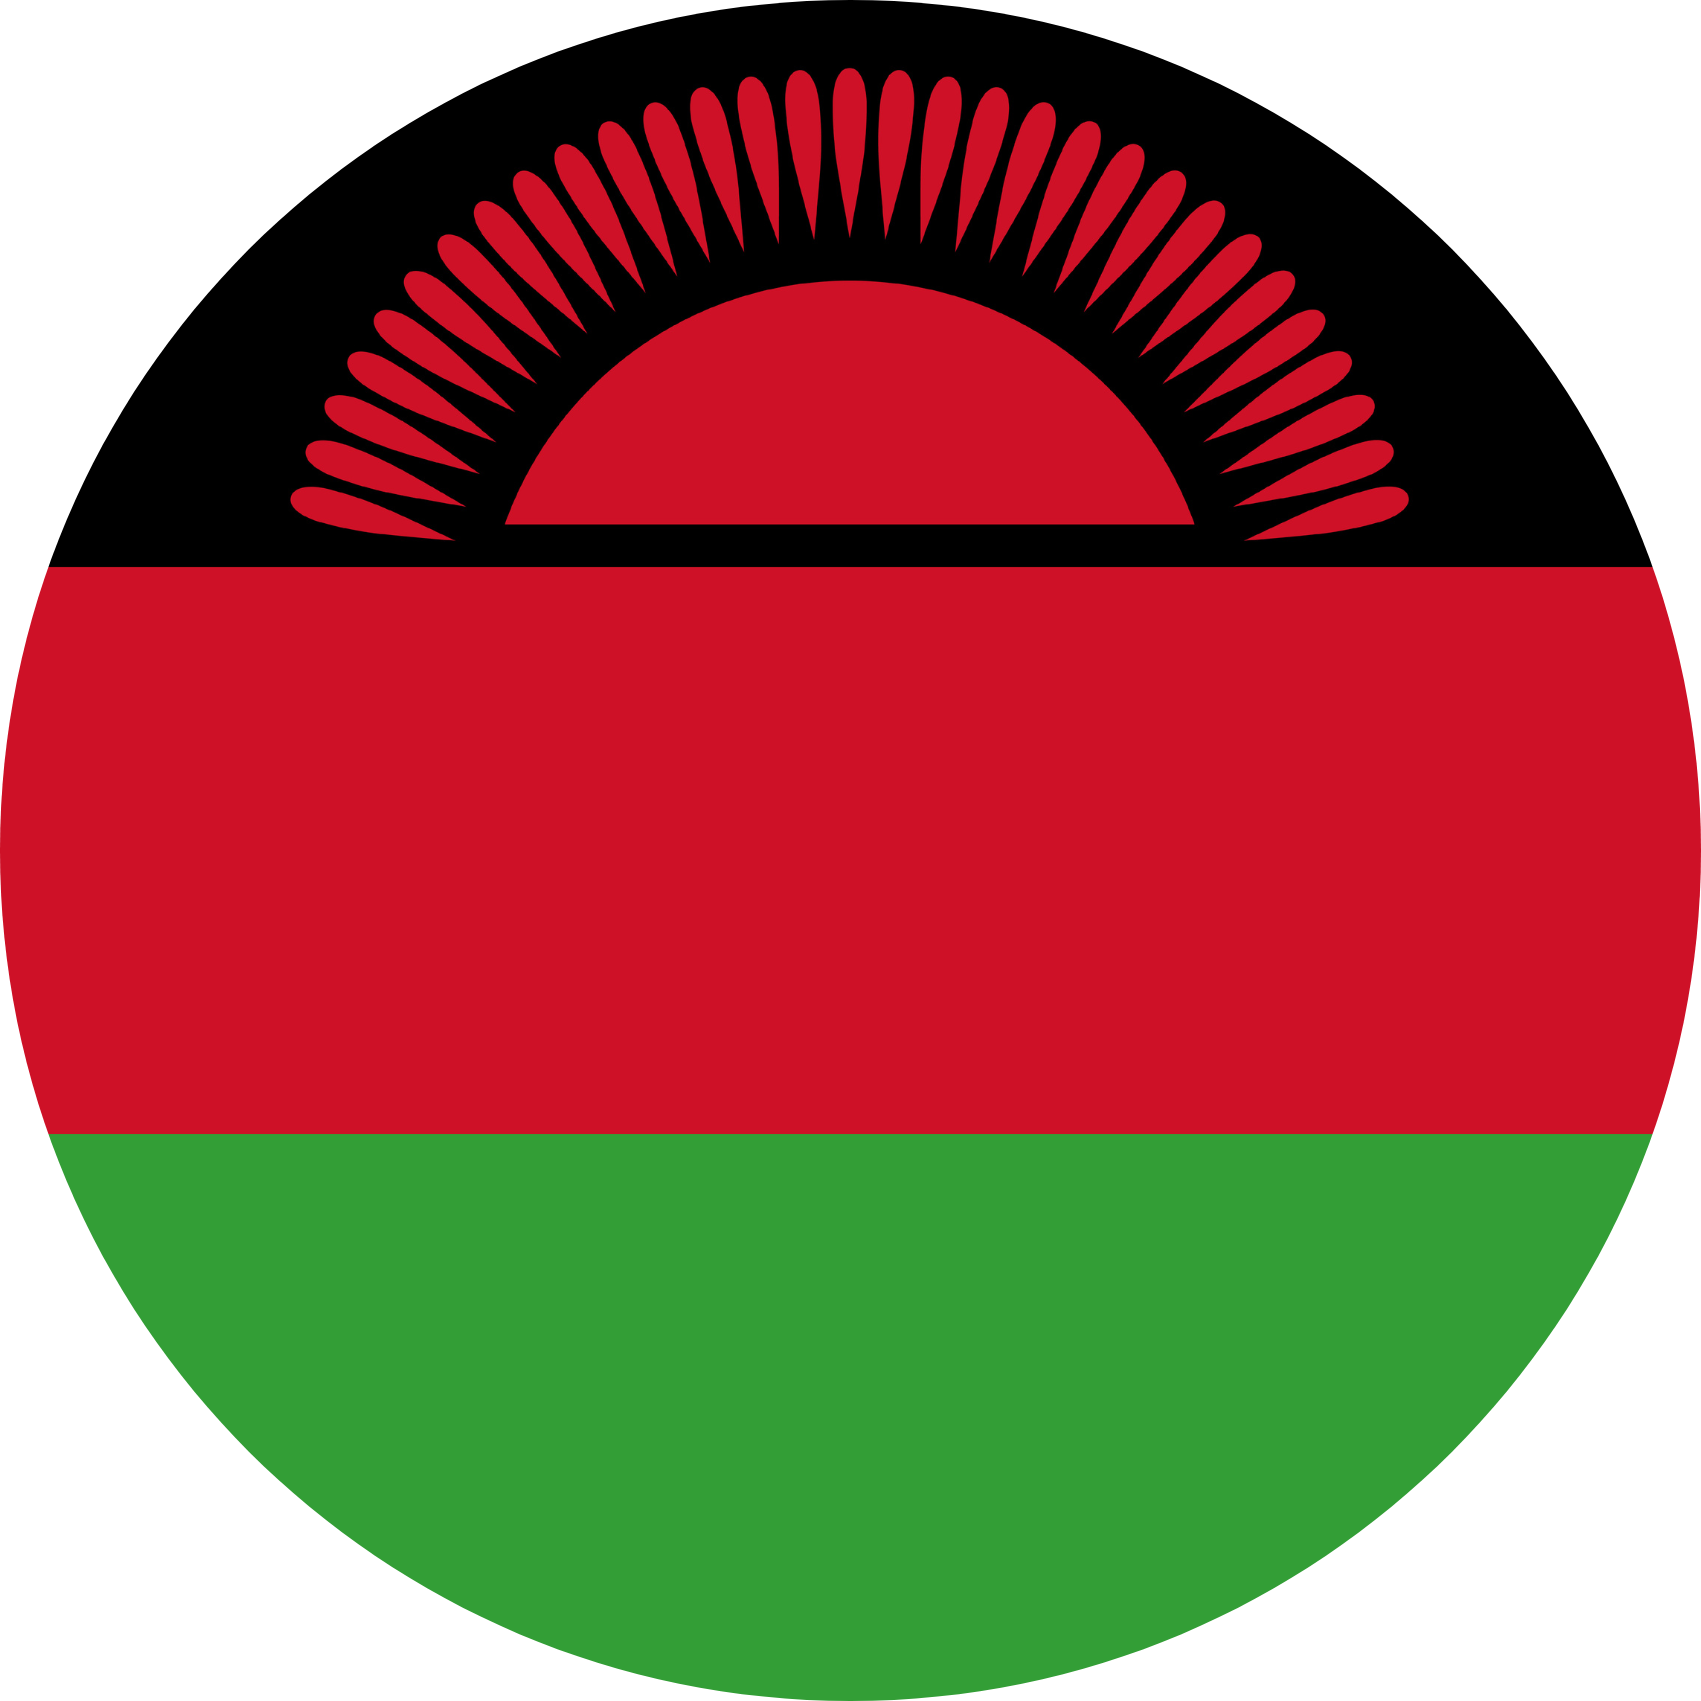 Malawi Flag in circle